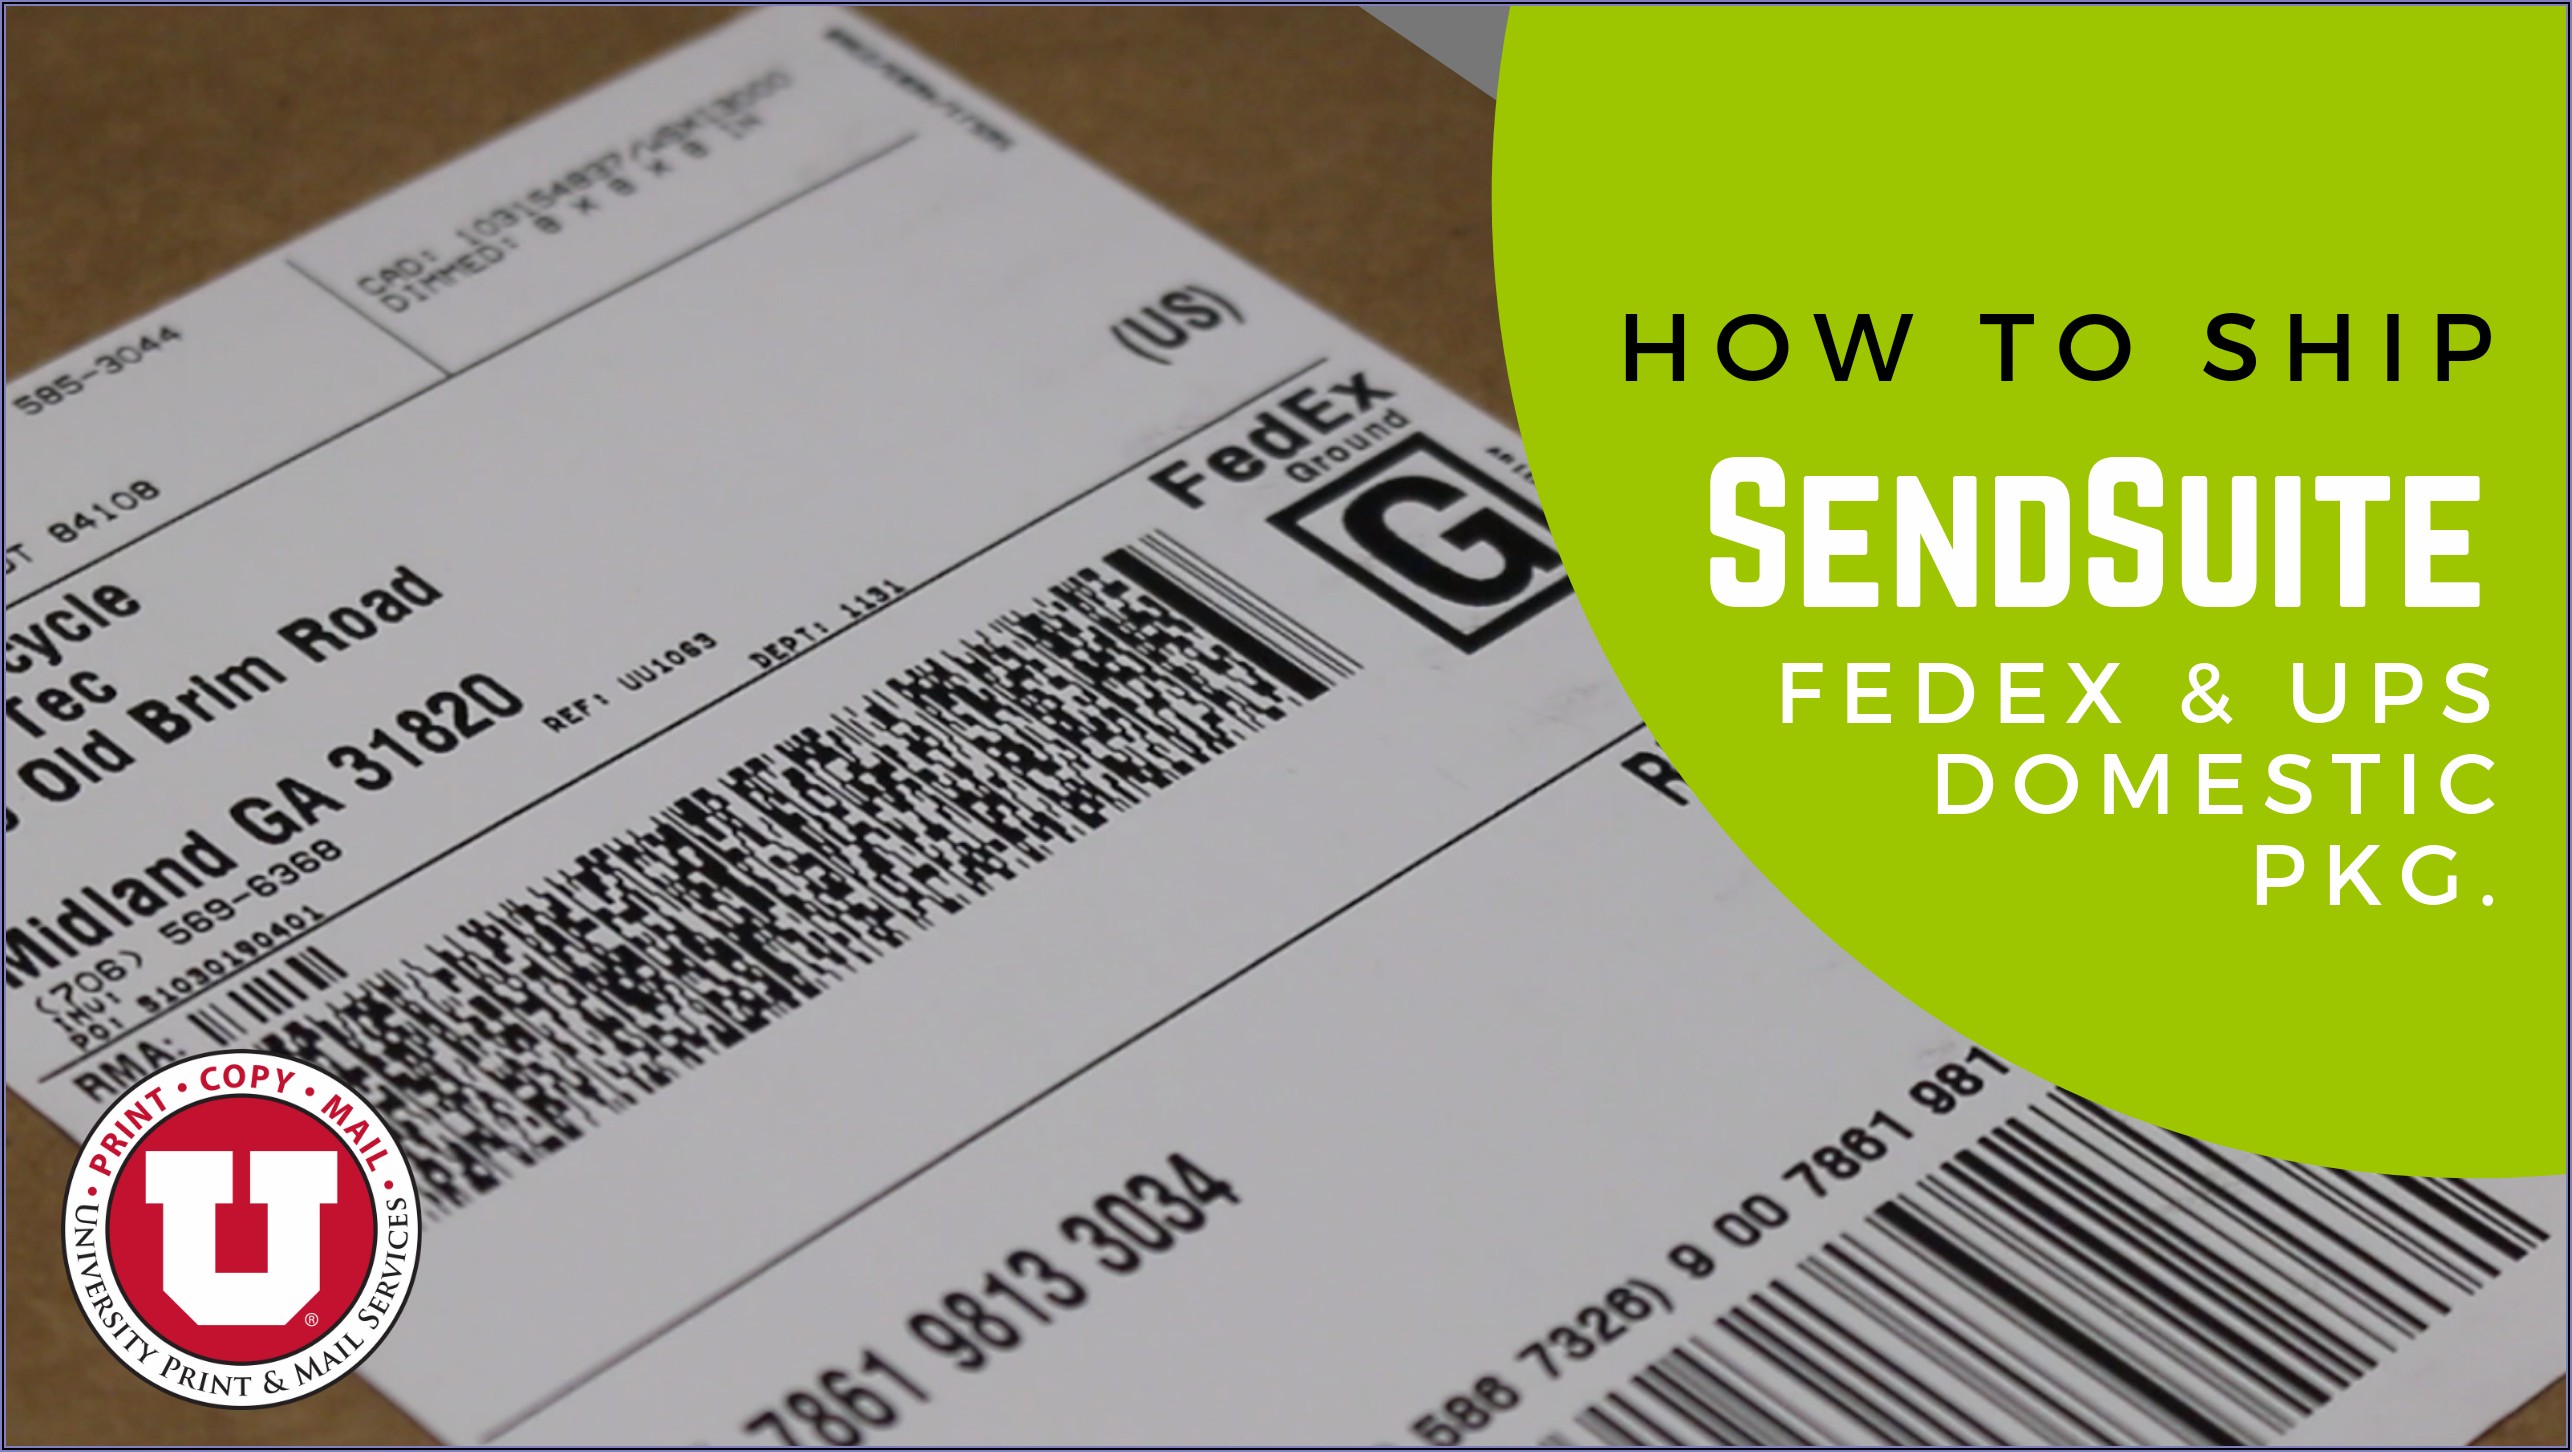 Fedex envelope sizes - artistsGros